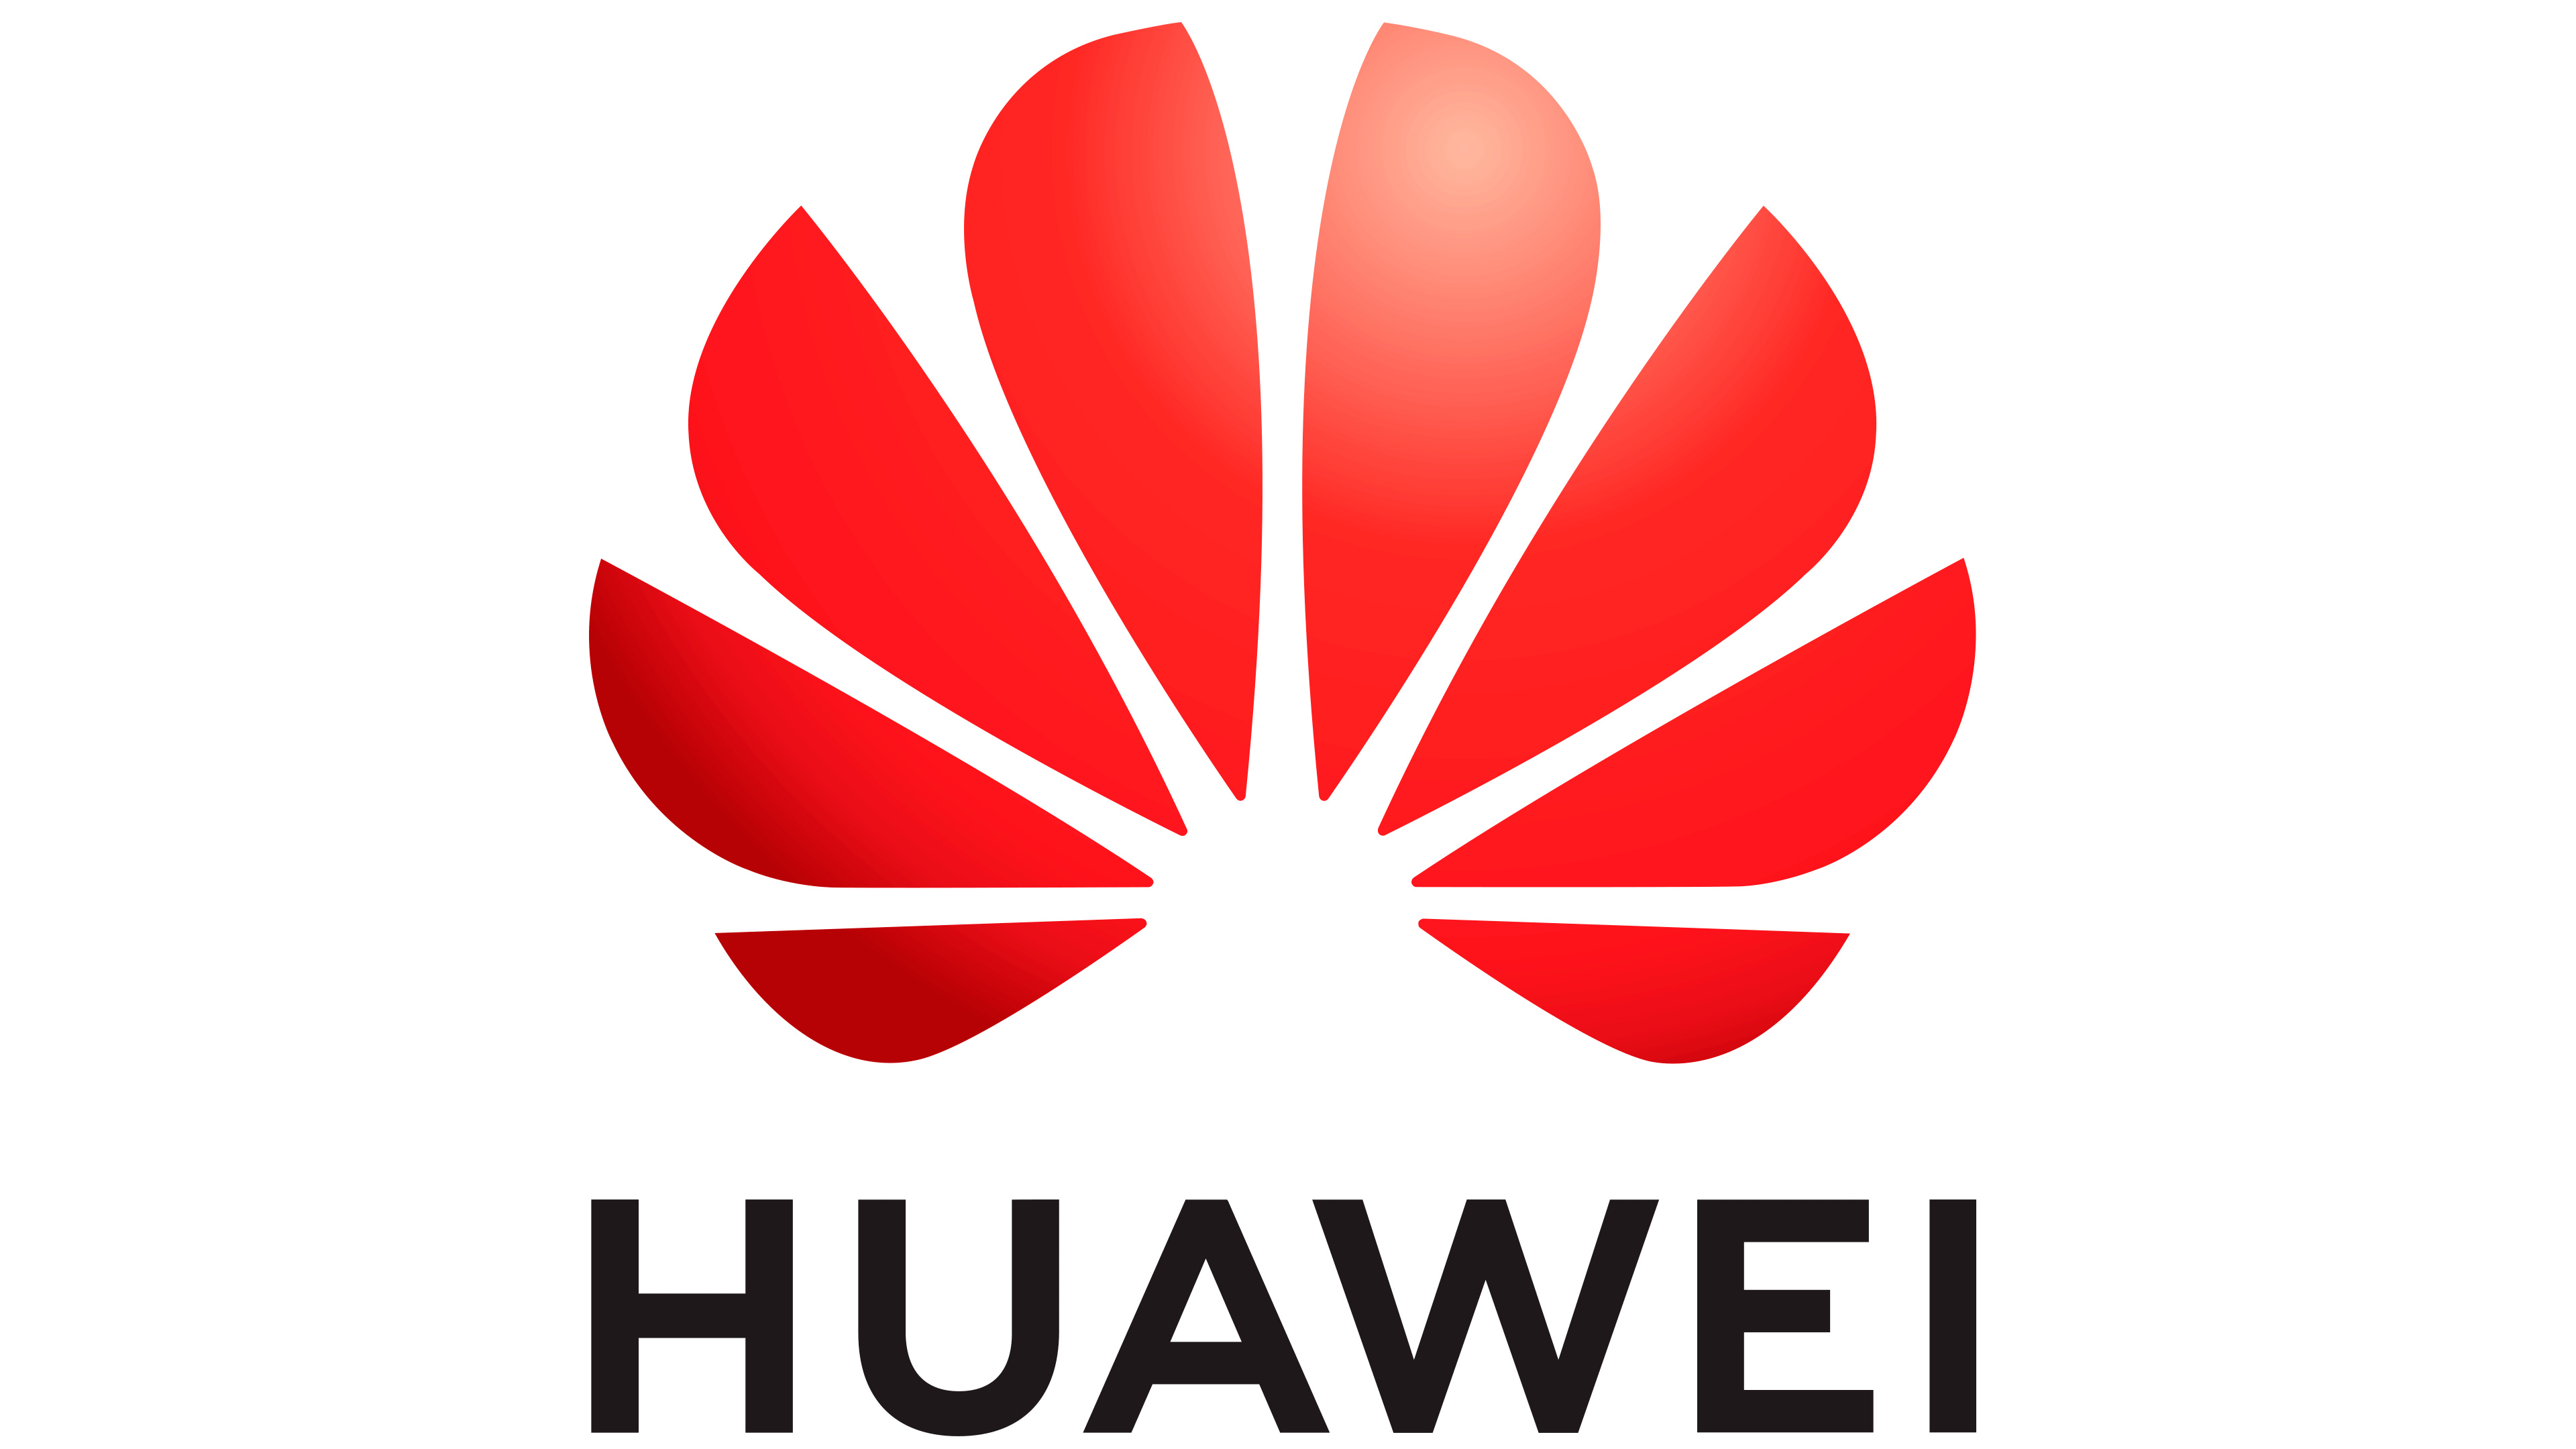 Huawei logo, Symbol meaning, Brand's history, PNG format, 3840x2160 4K Desktop